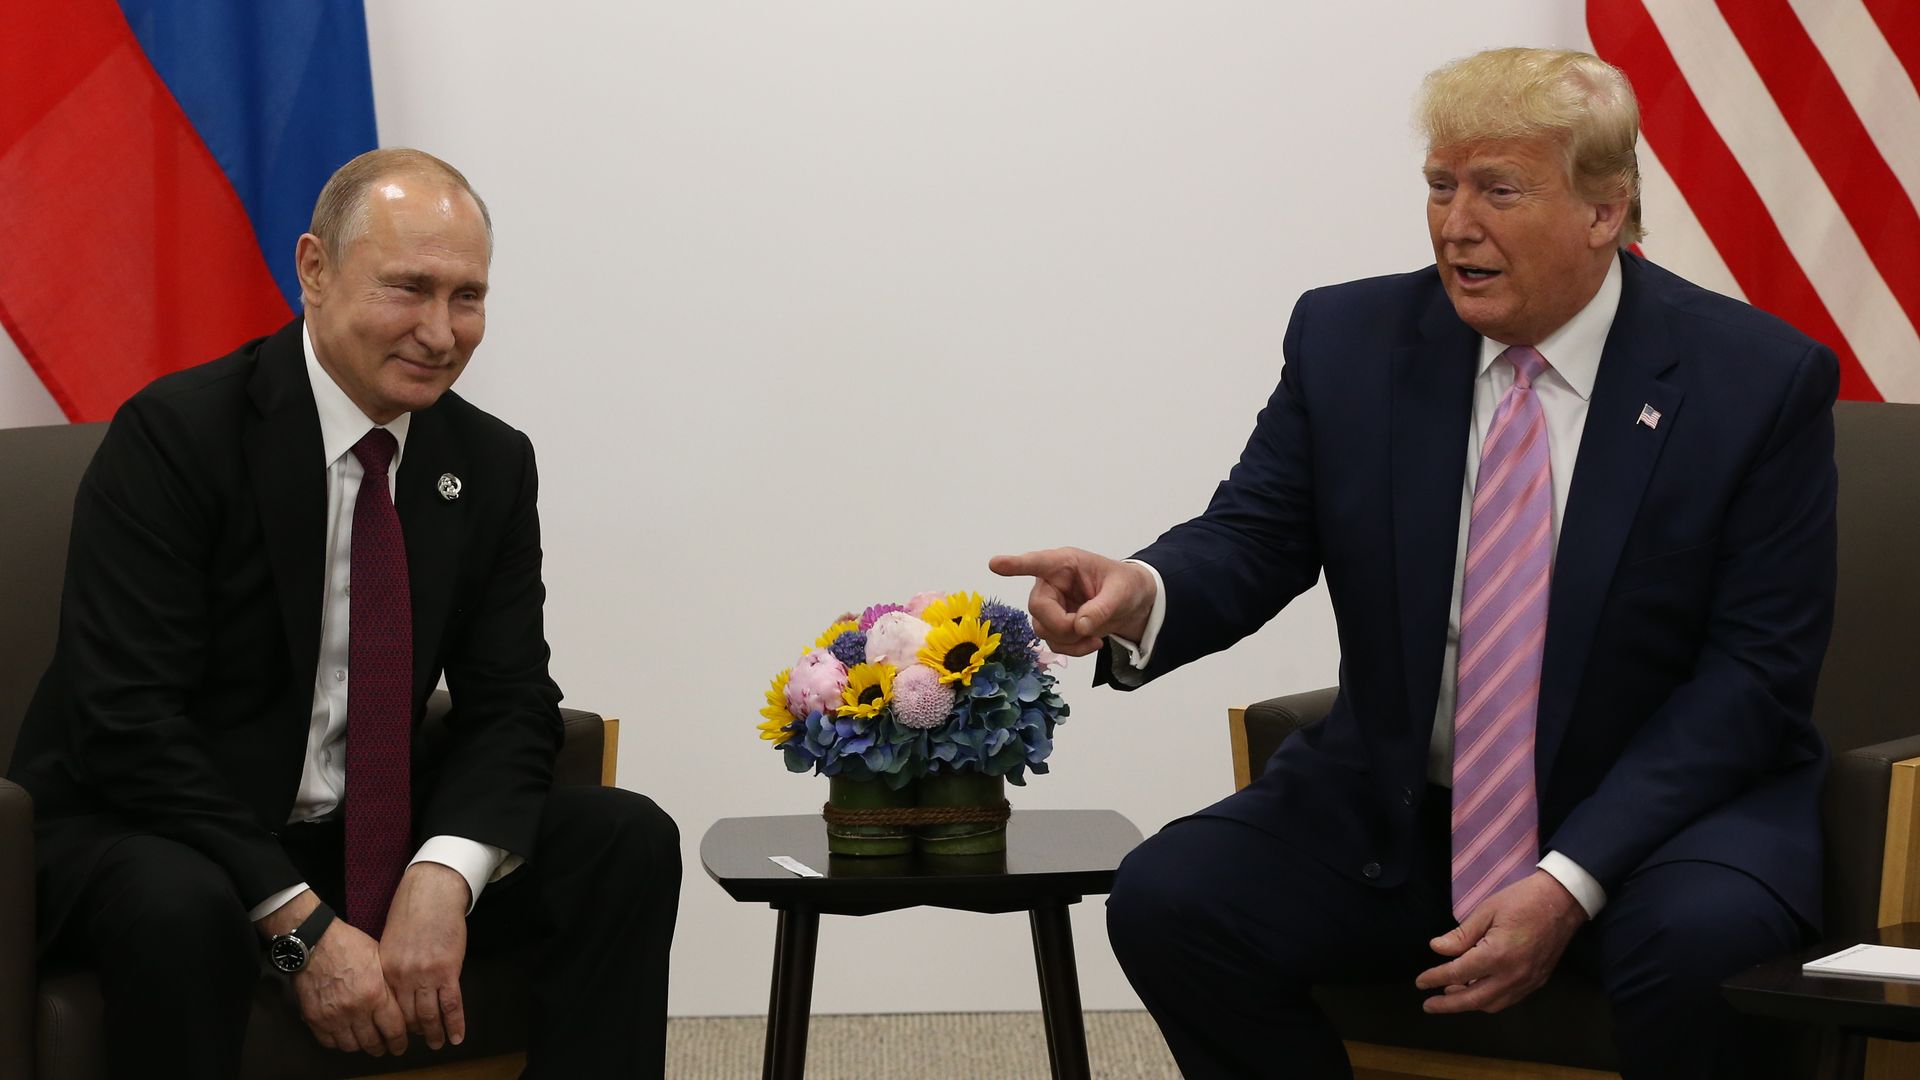 U.S. President Donald Trump (R) and Russian President Vladimir Putin (L) attend their bilateral meeting at the G20 Osaka Summit 2019, in Osaka, Japan